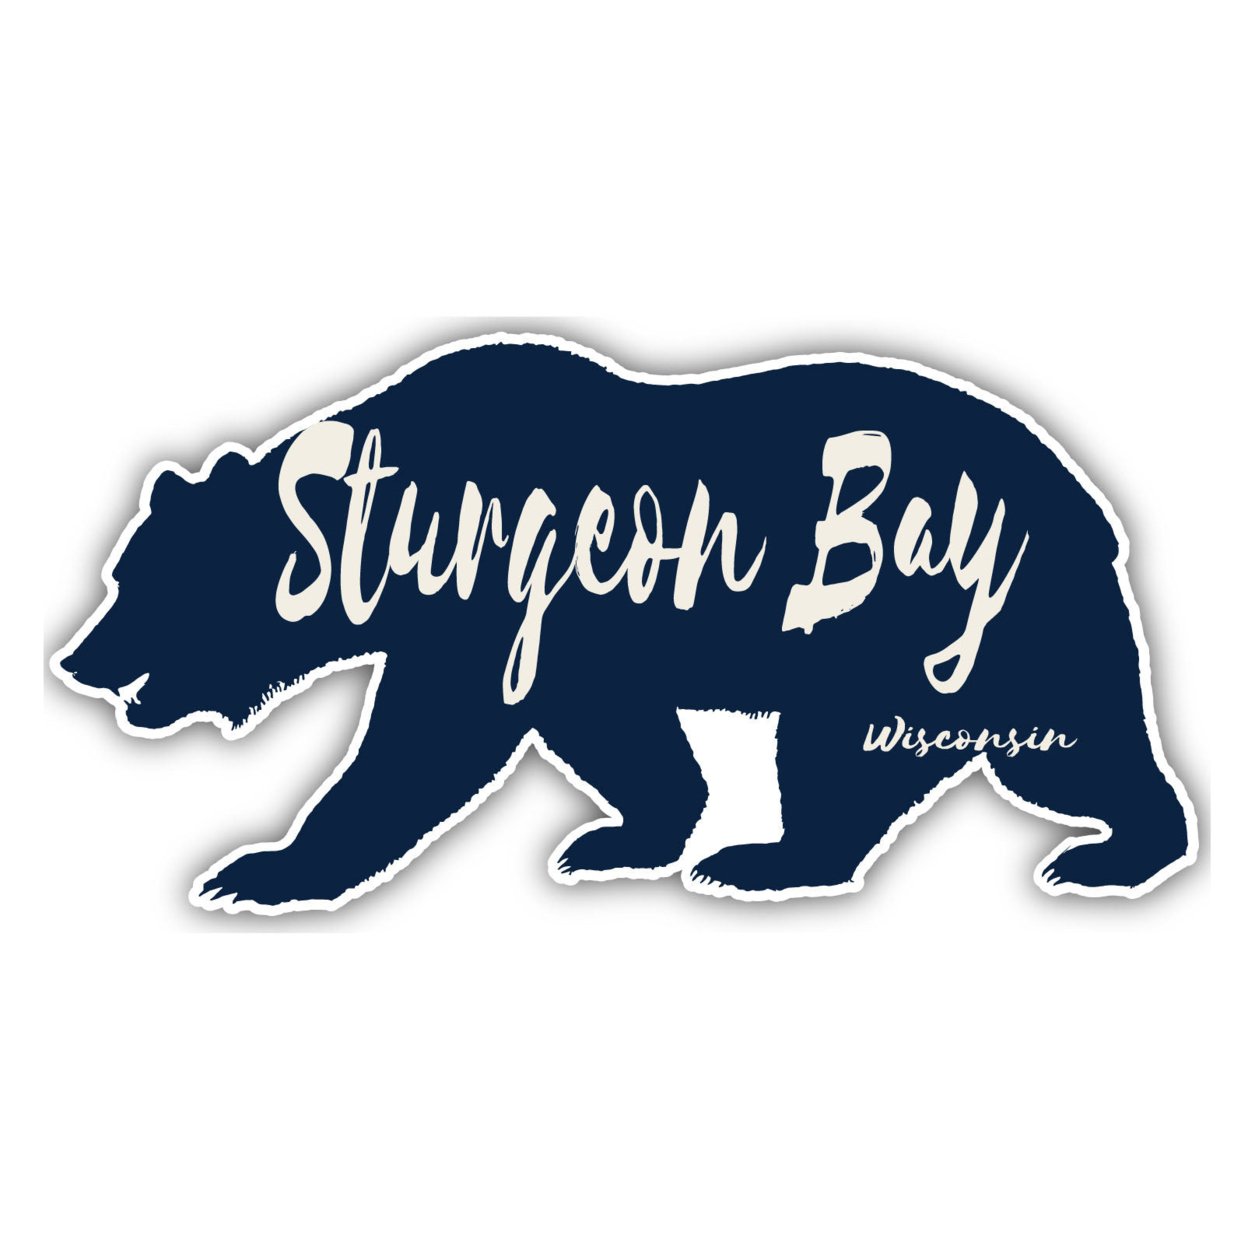 Sturgeon Bay Wisconsin Souvenir Decorative Stickers (Choose Theme And Size) - Single Unit, 4-Inch, Camp Life